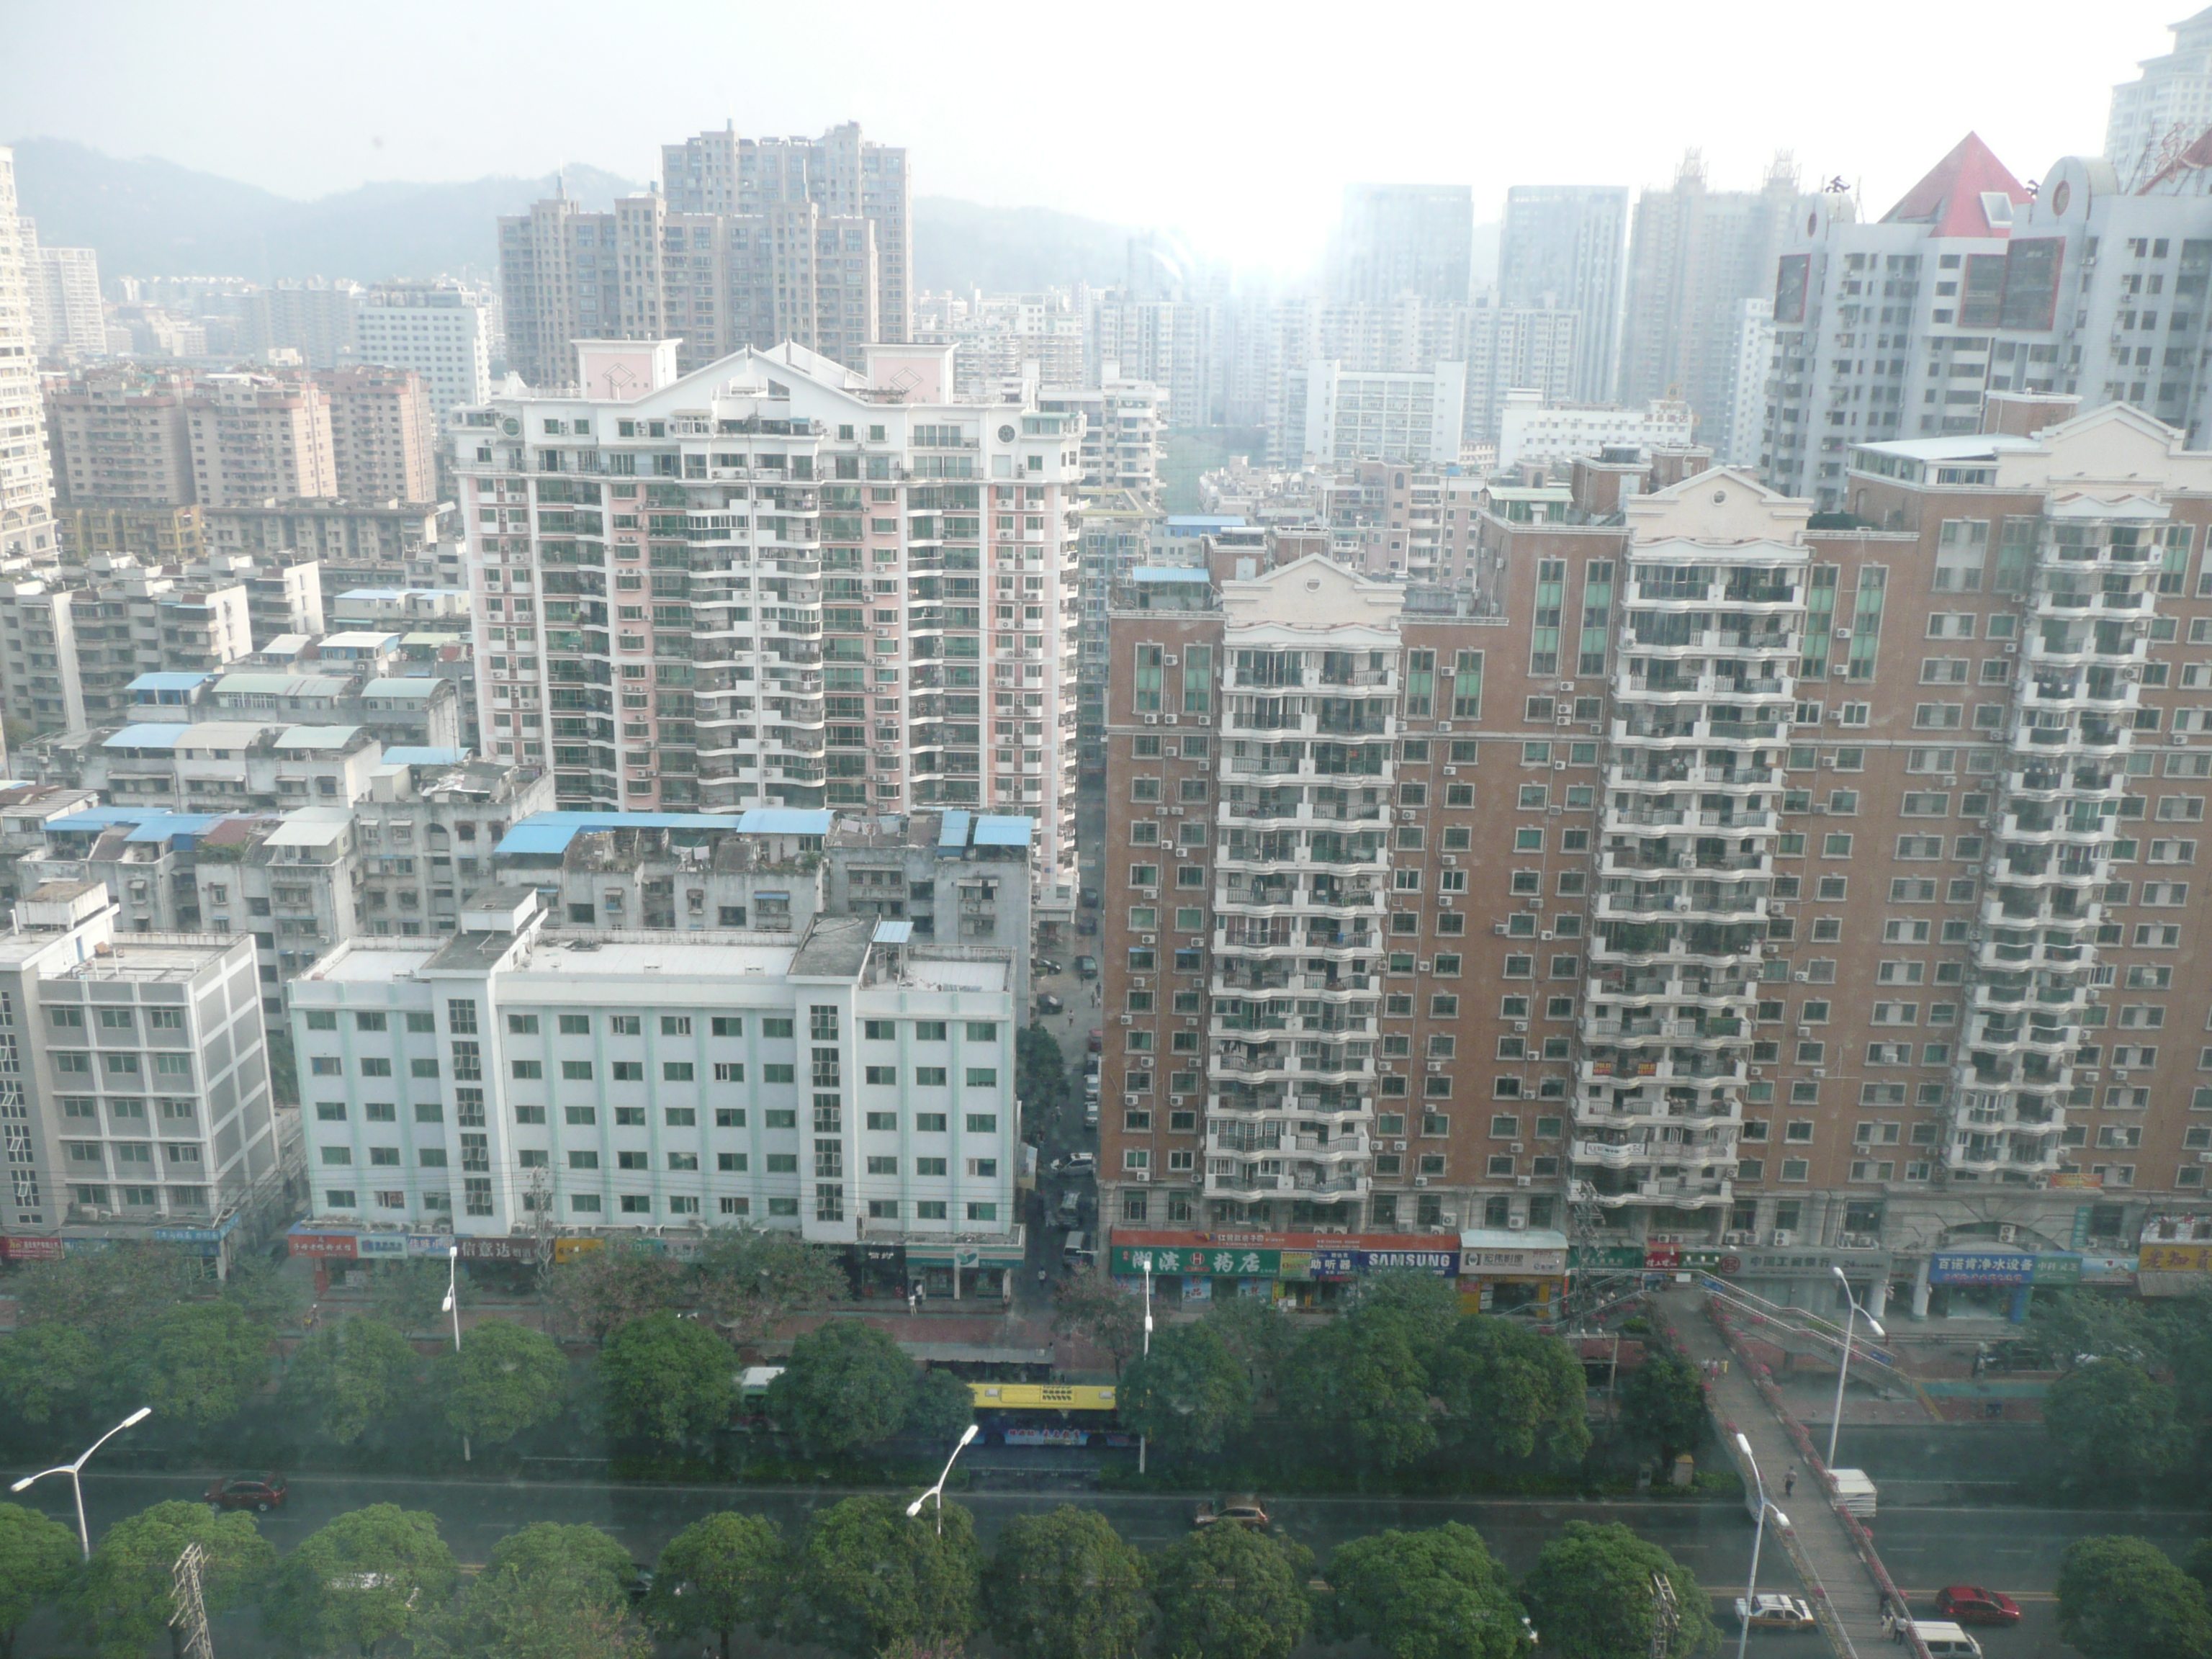 The skyline in Xiamen.